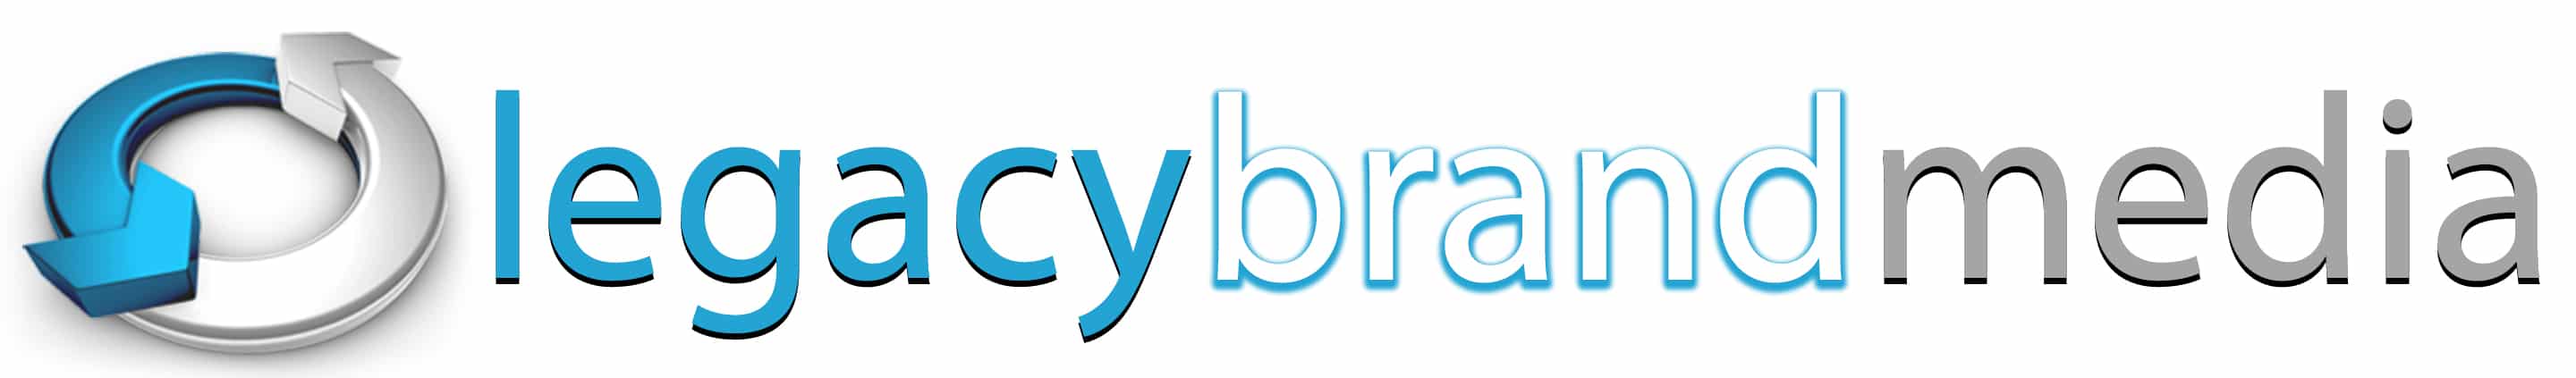 Legacy Brand Media